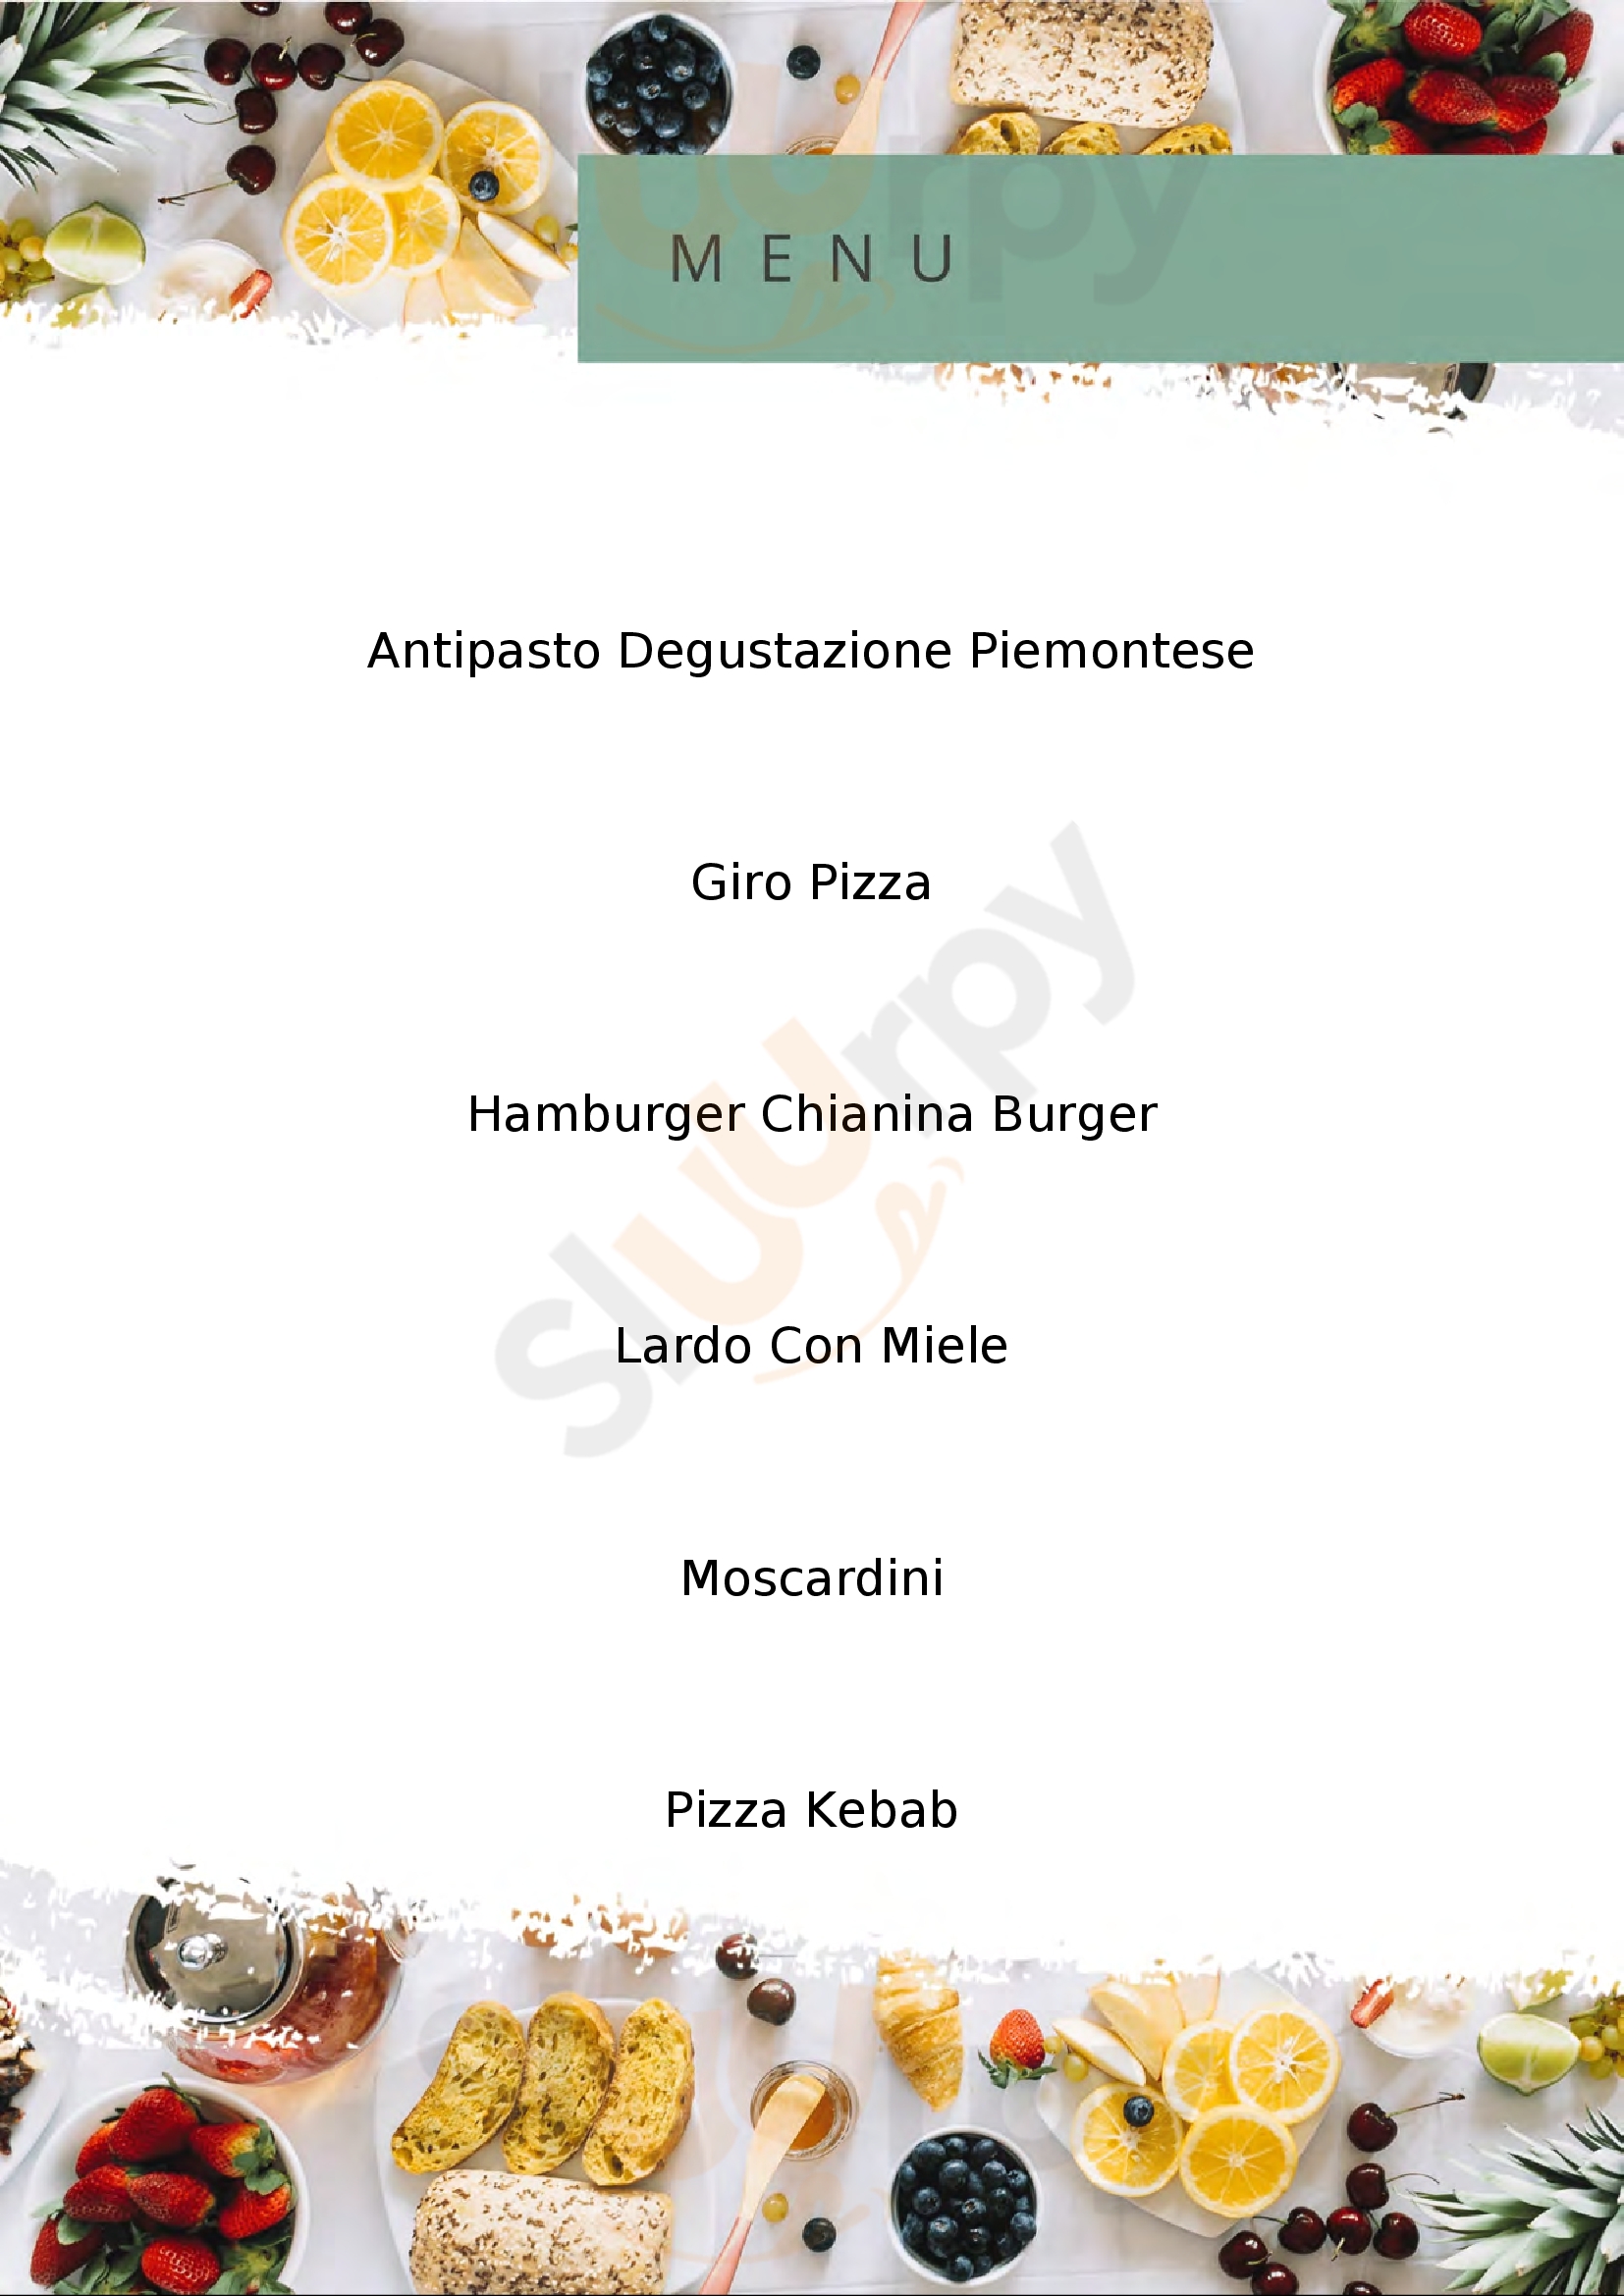 Tourle La Pizzeria Buccinasco menù 1 pagina